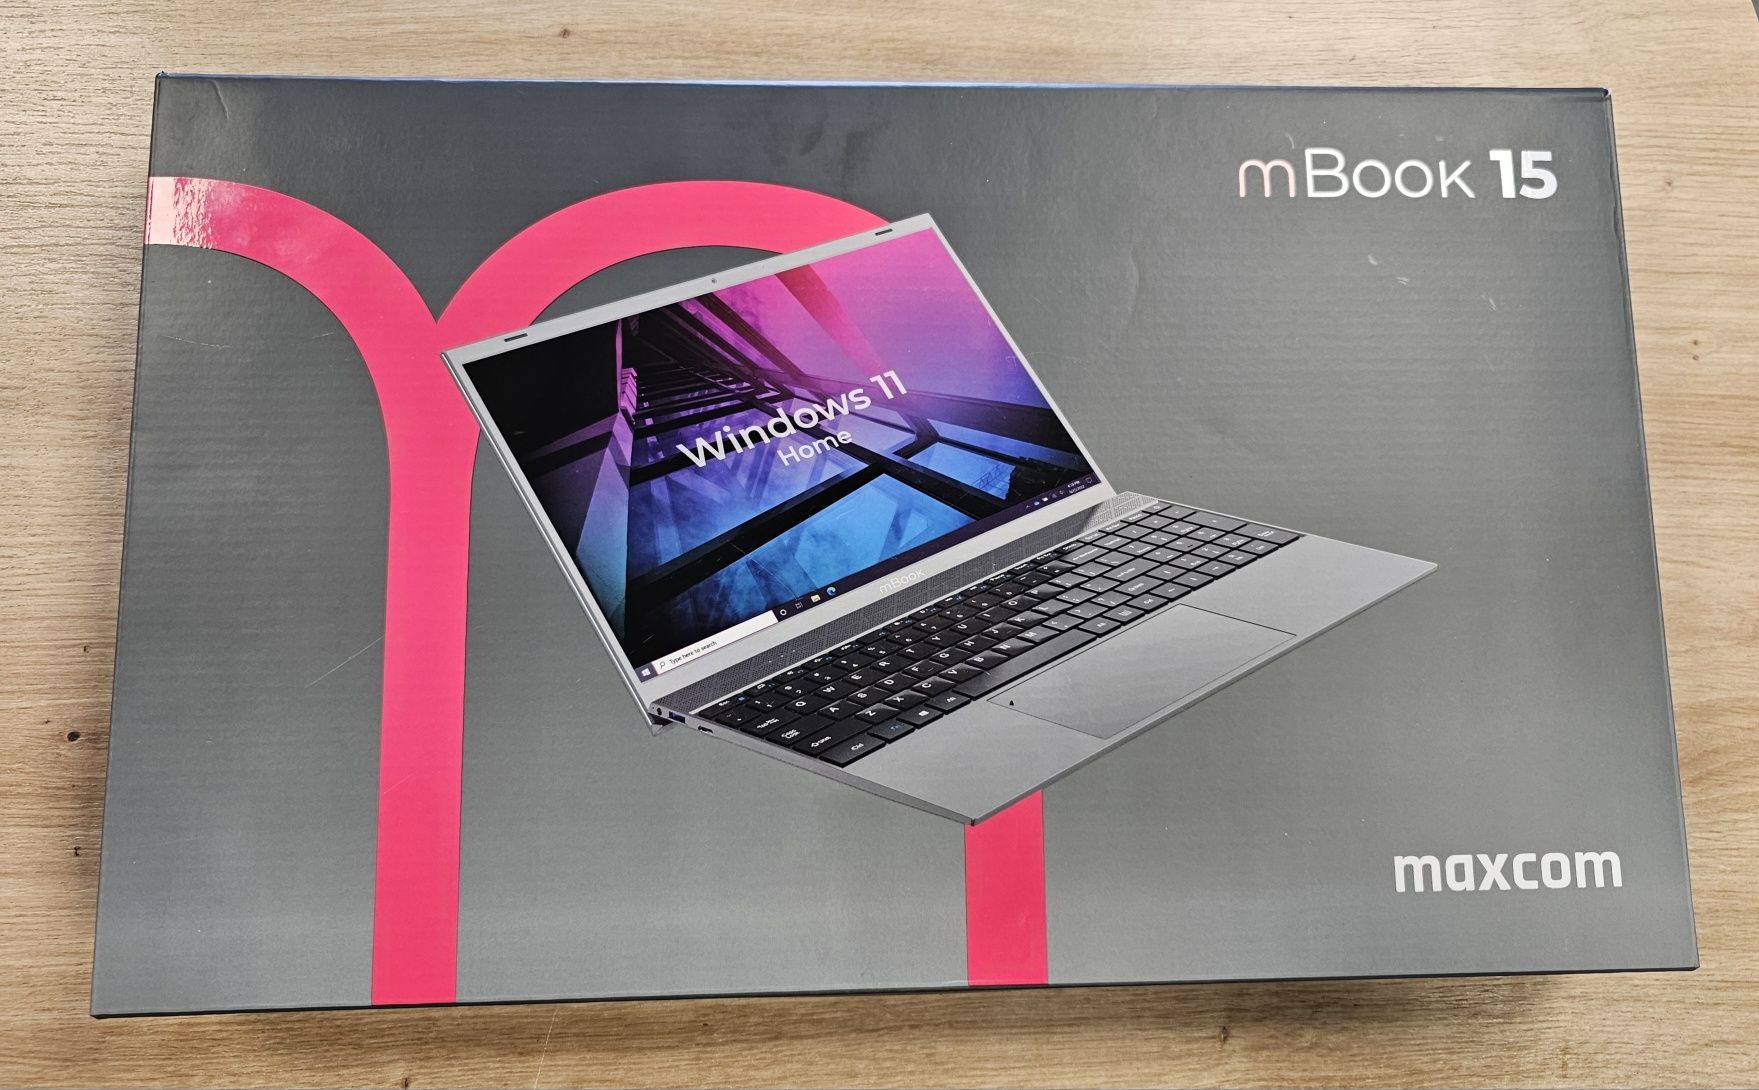 Nowy Maxcom mBook 15 - Lombard LUMIK Sieradz